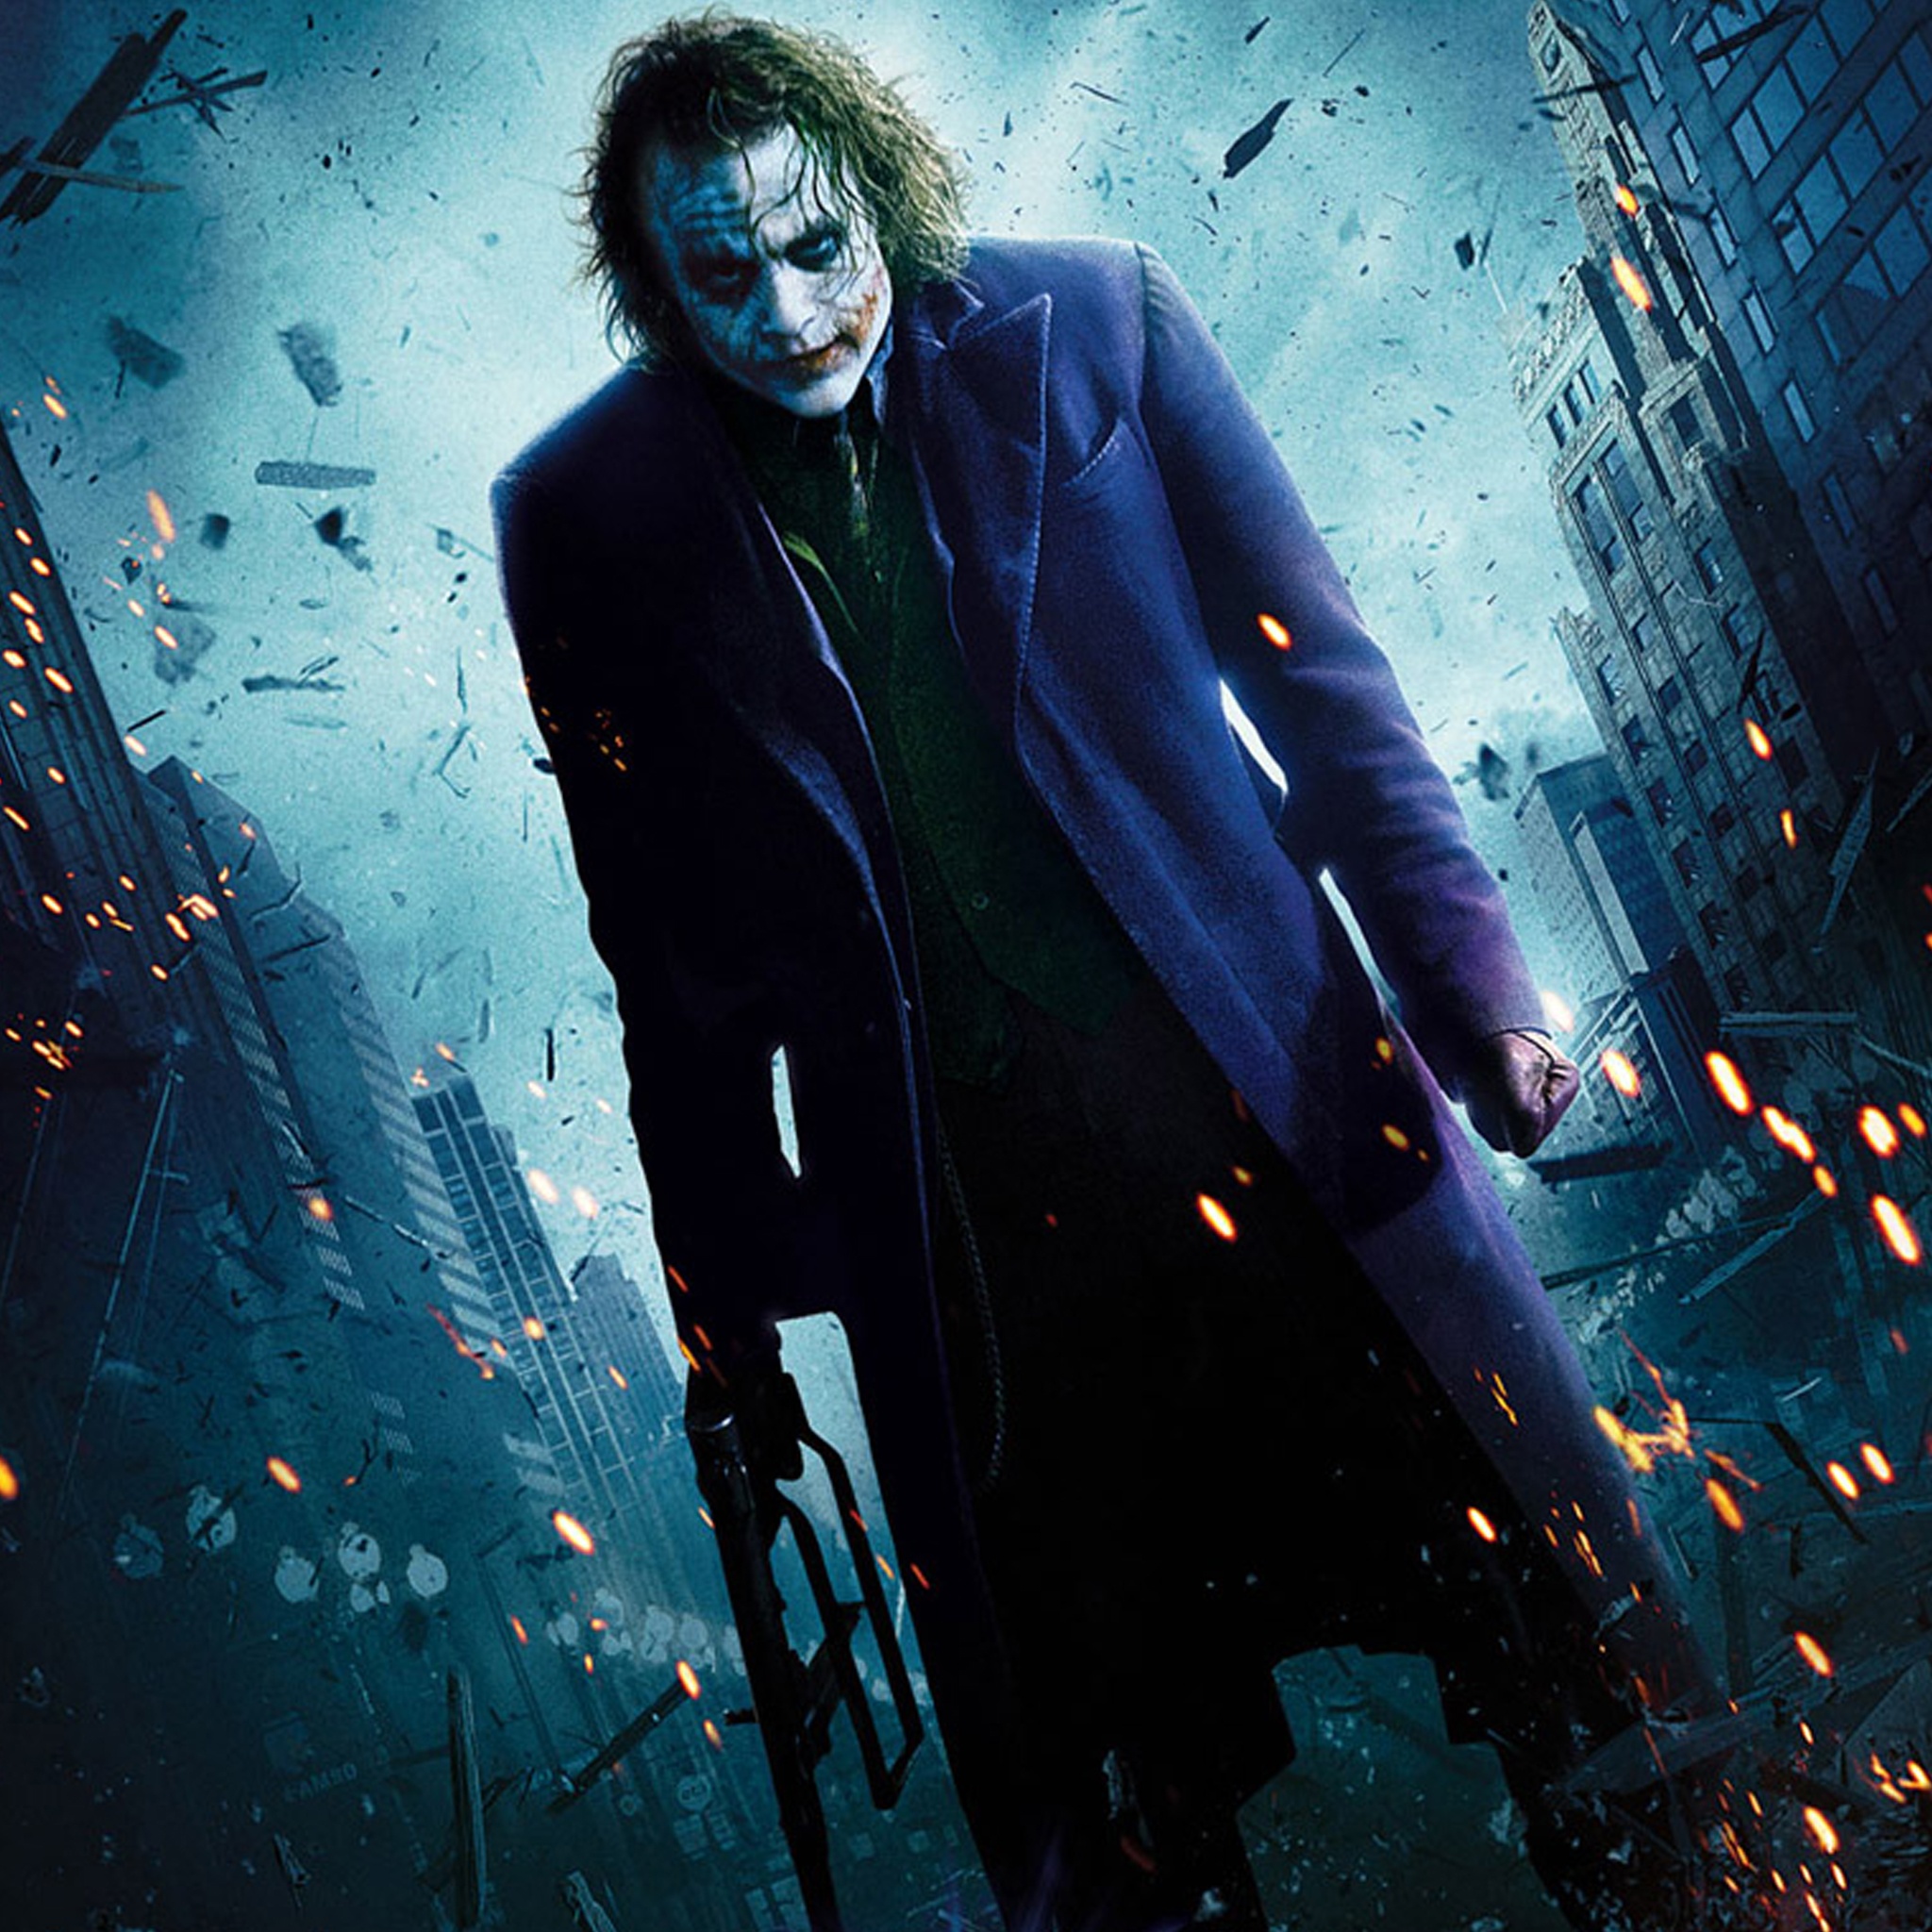 [50+] Joker Dark Knight Wallpapers | WallpaperSafari.com